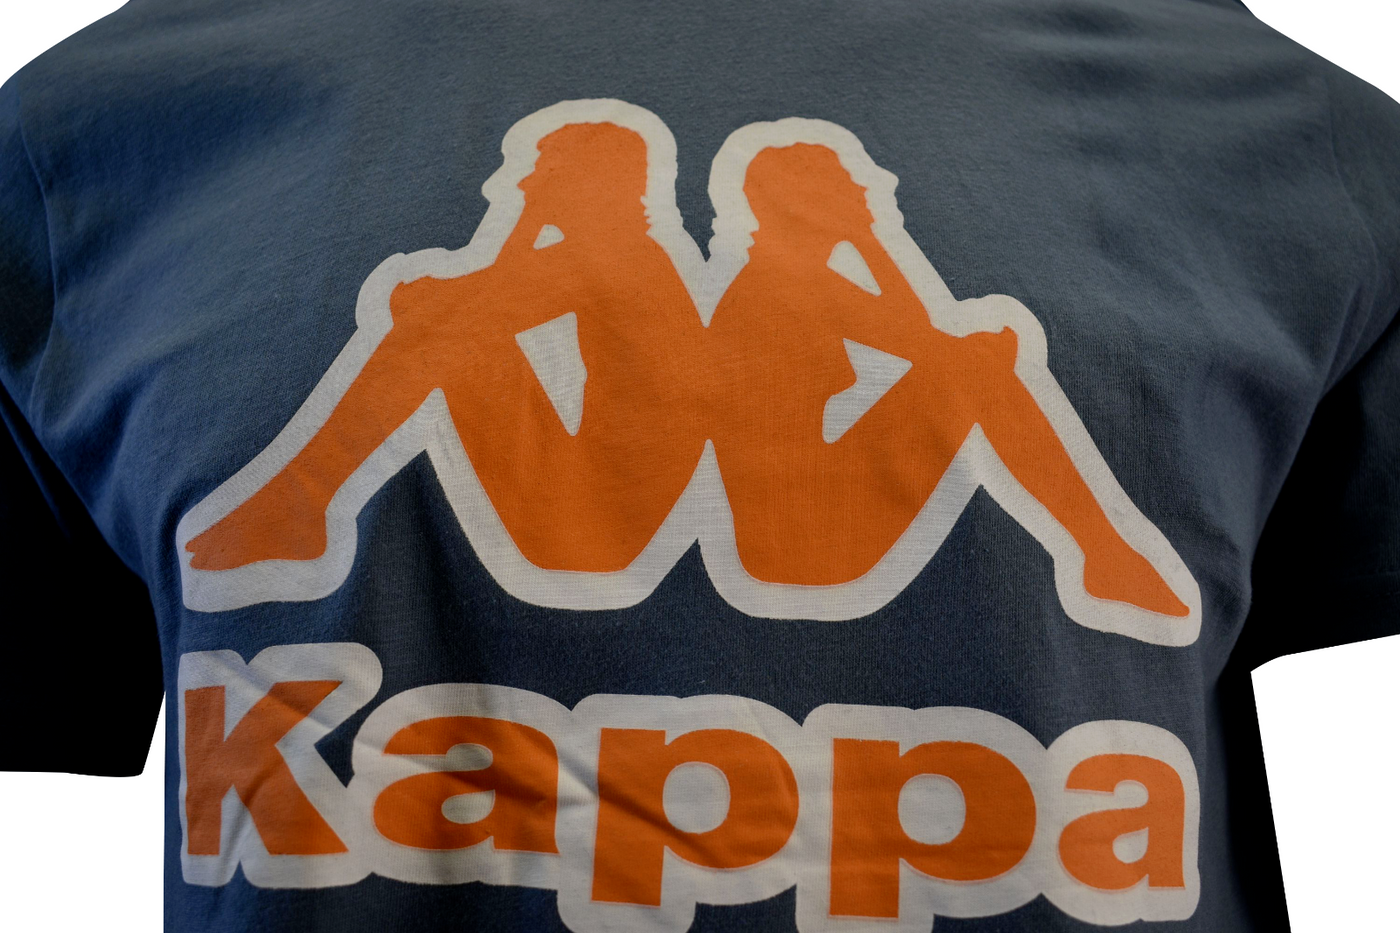 Kappa Men's T-Shirt Sky Blue Abelo Orange Chest Logo S/S Tee (S05)